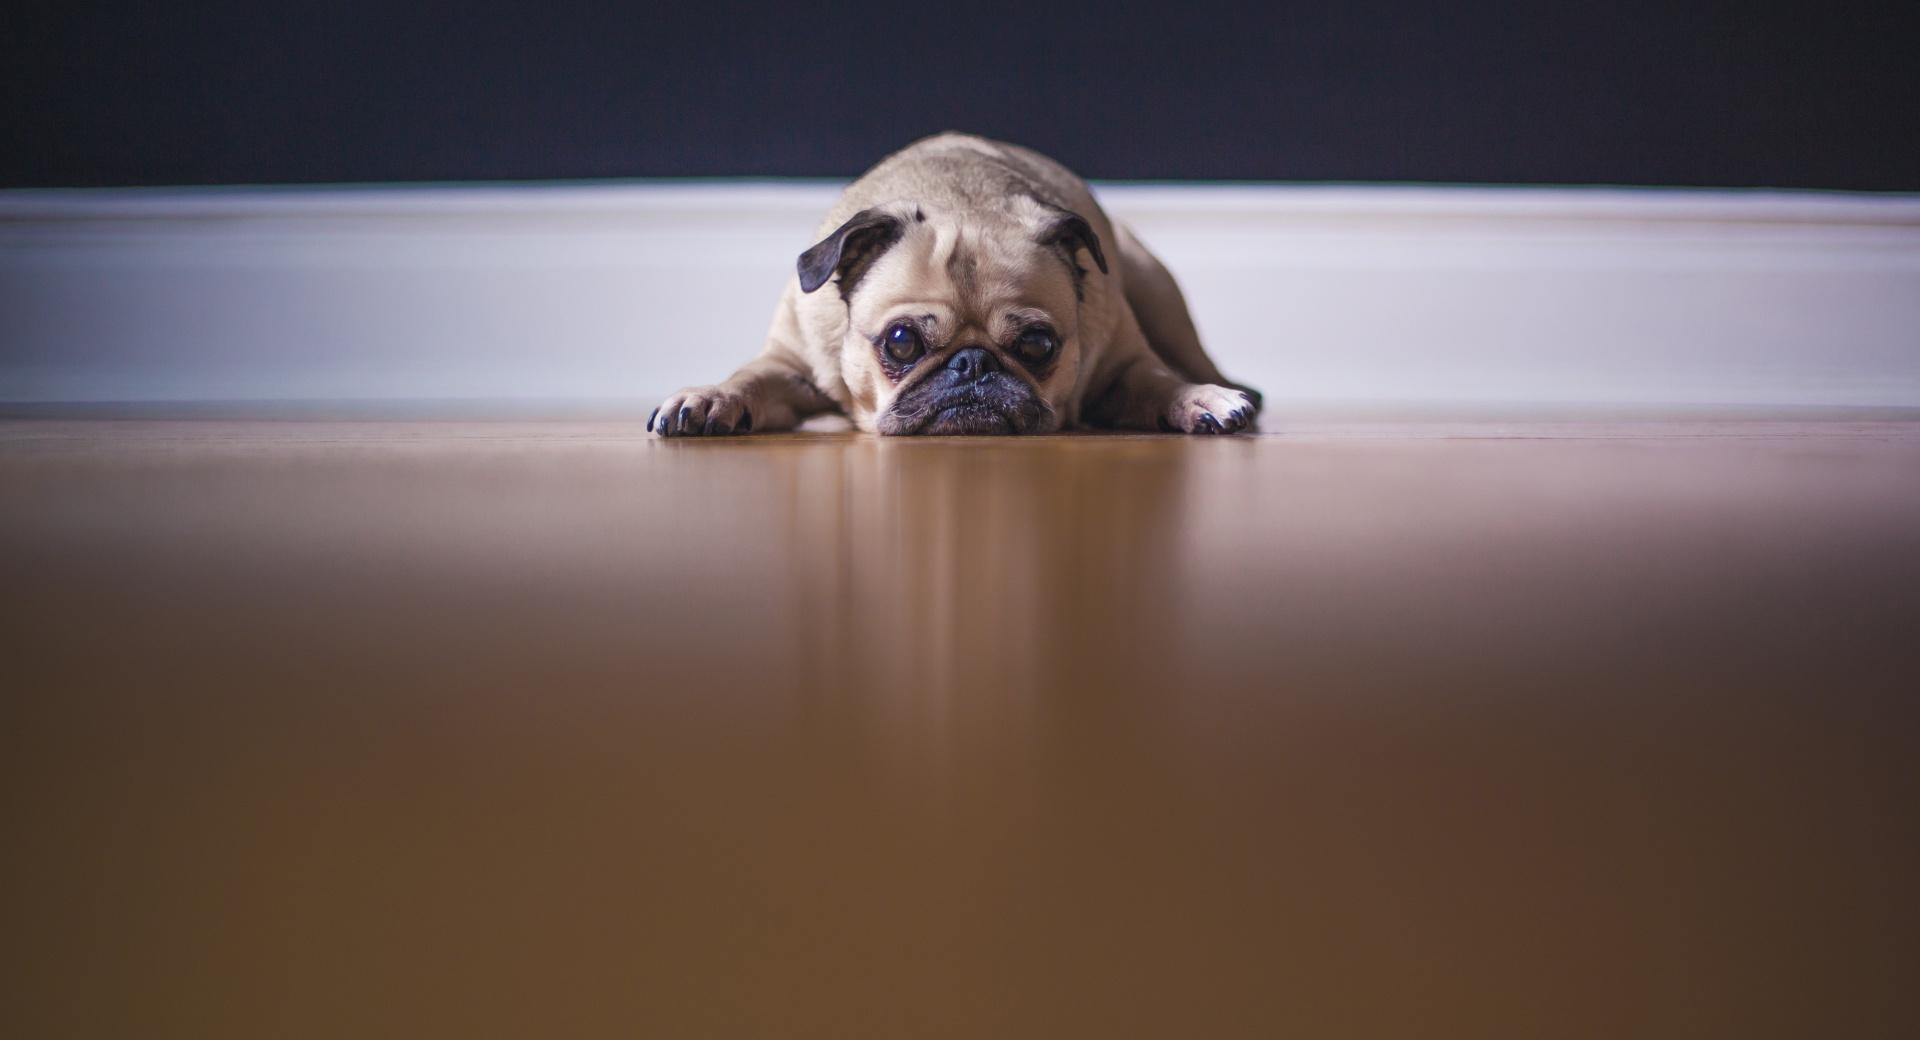 Saddest Pug Dog at 1152 x 864 size wallpapers HD quality